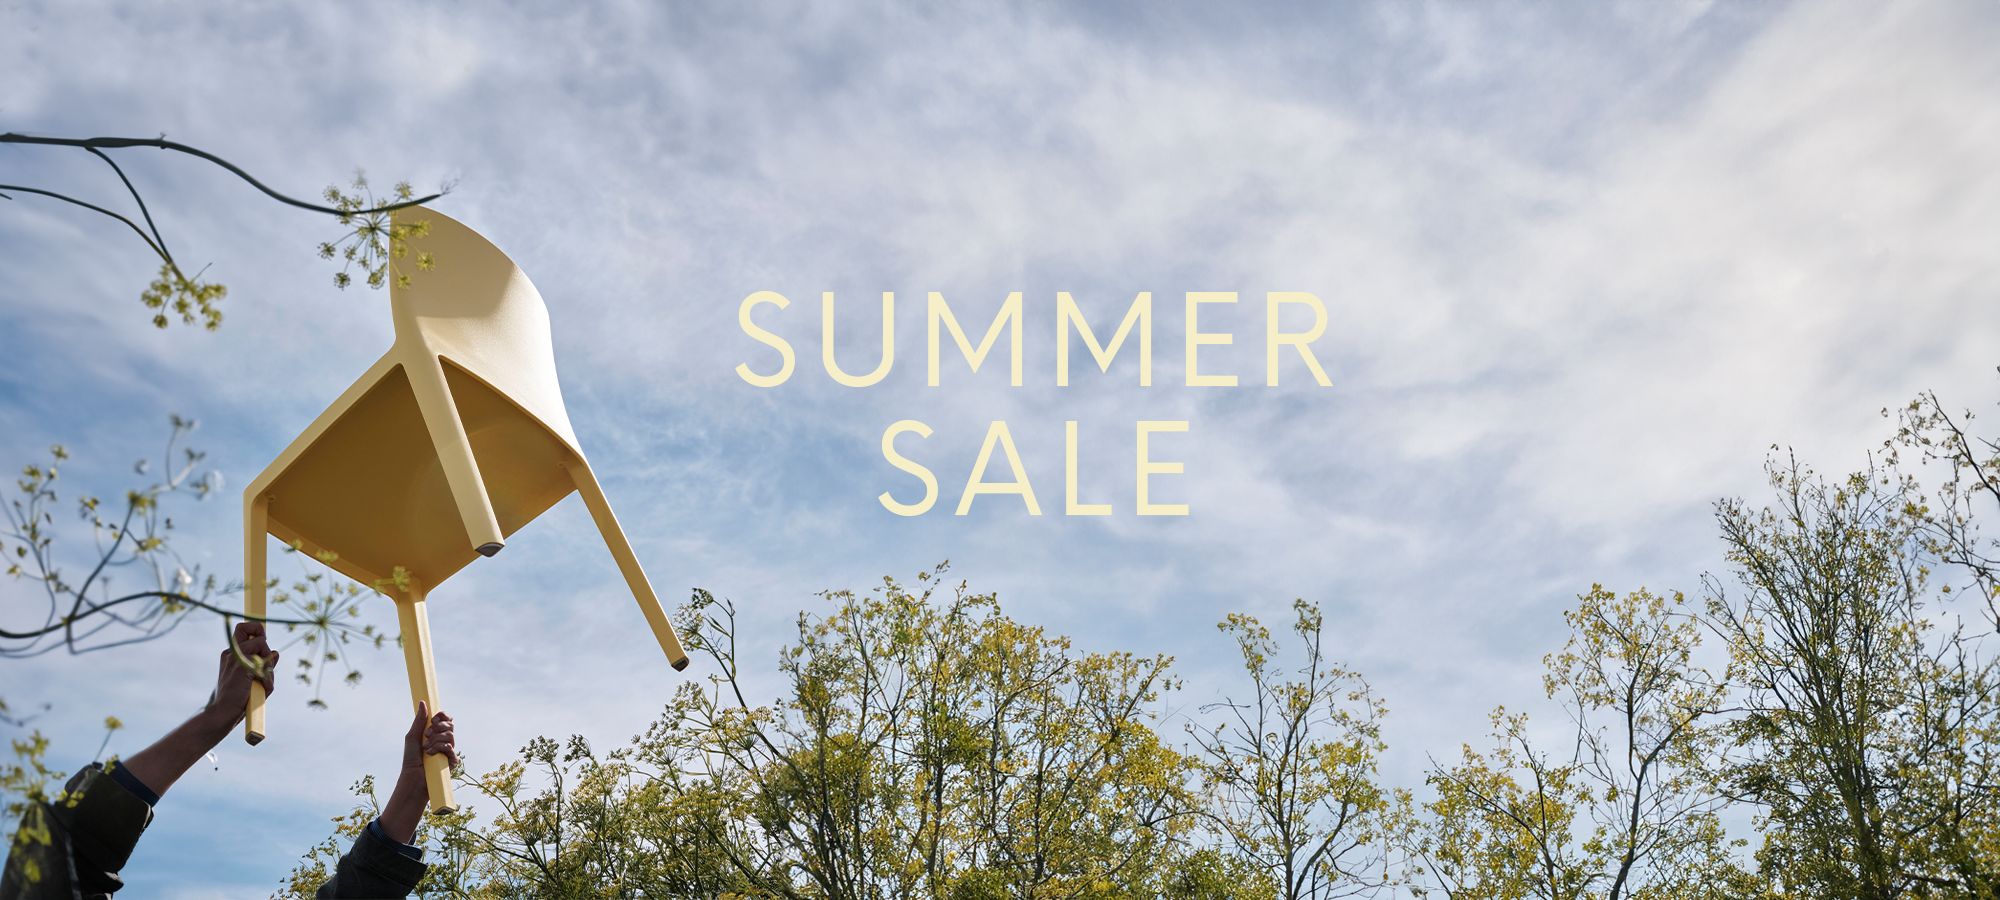 Summer Sale at Byflou.com